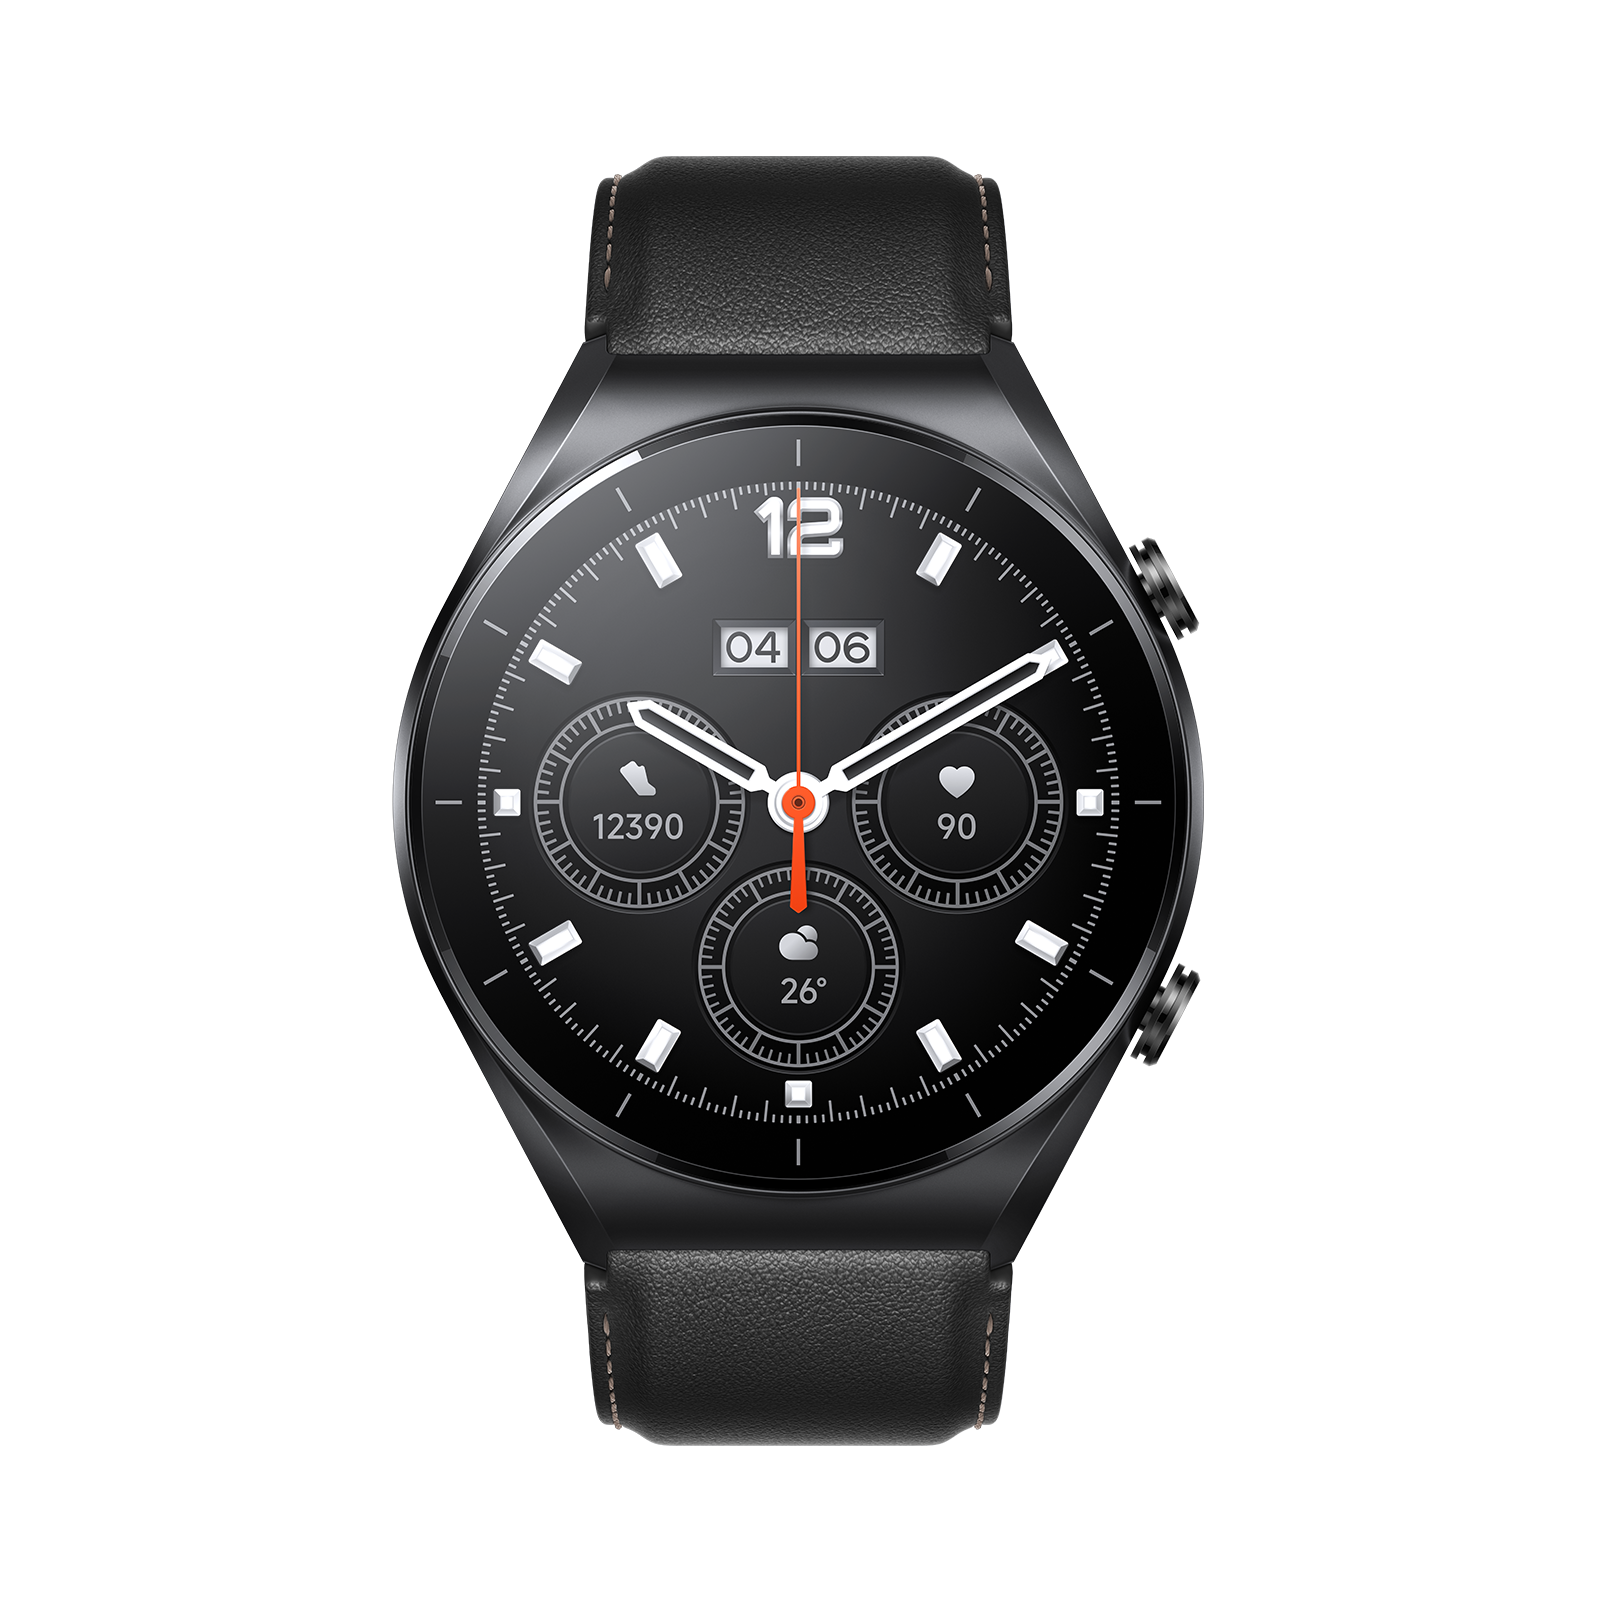 Image of Xiaomi Watch S1 Black | Stay classy, stay fit | 117 modalità fitness | Sito ufficiale Xiaomi